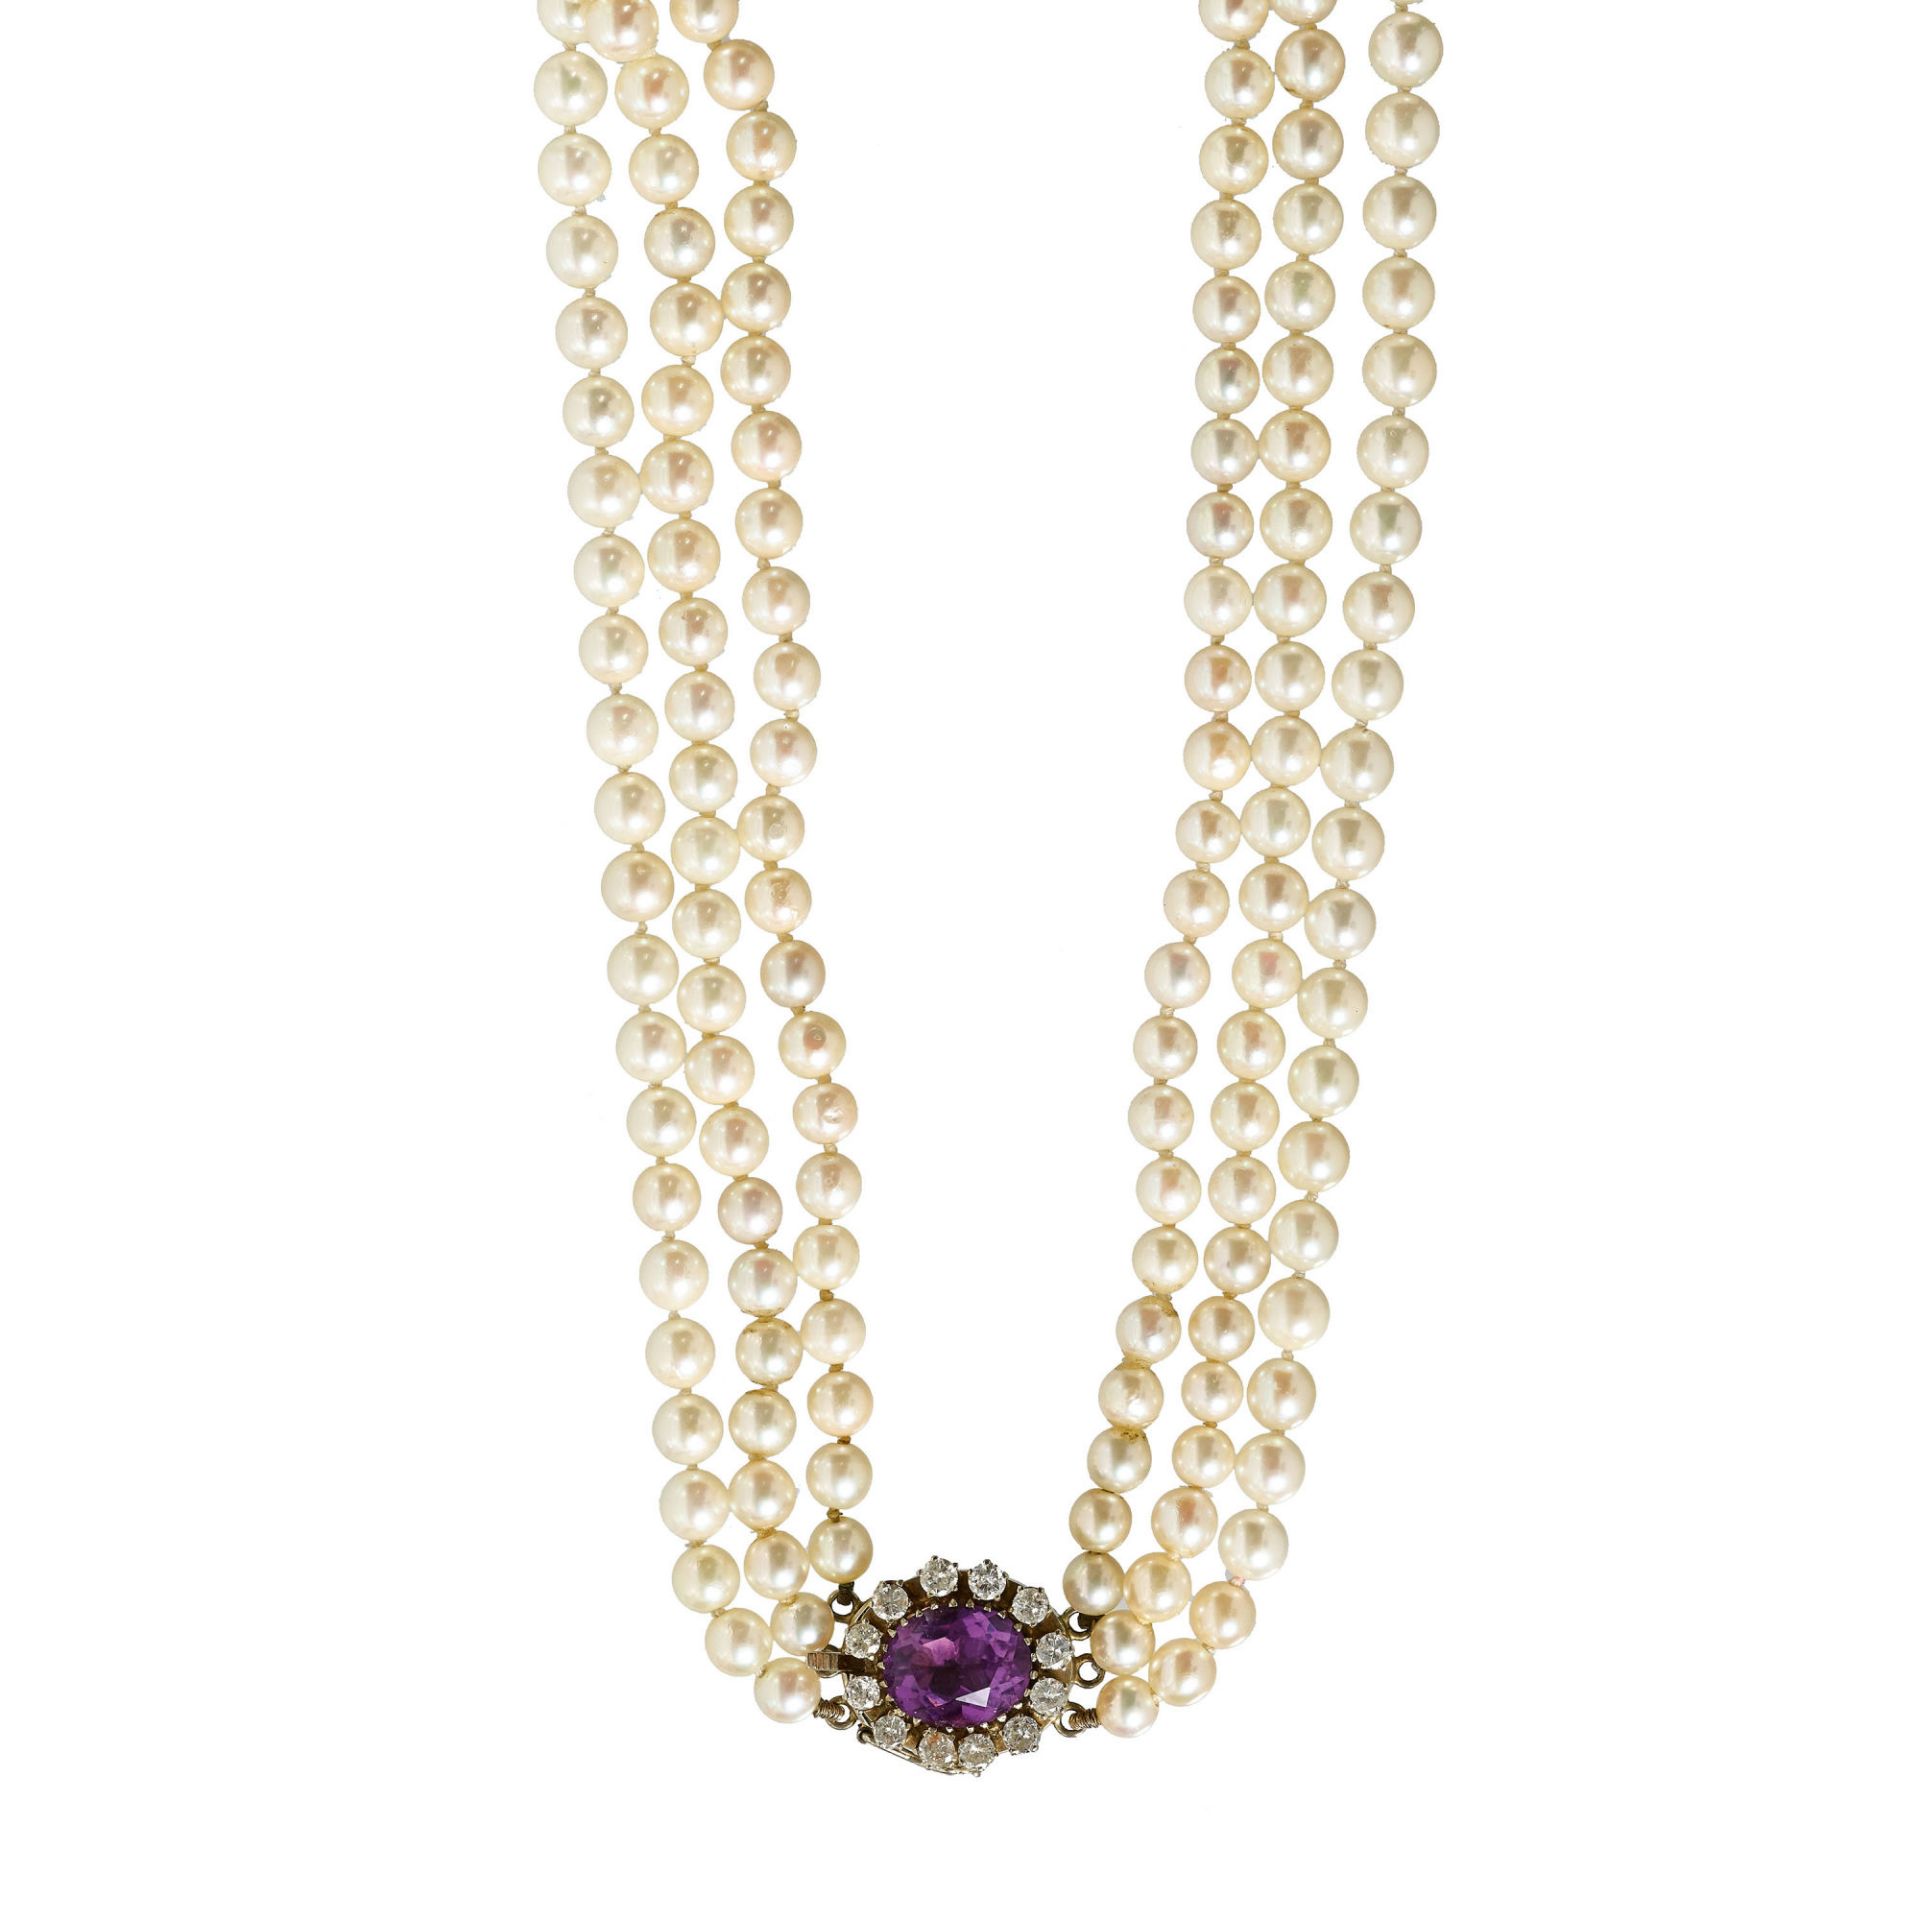 AMETHYST-PERLEN-COLLIER / Amethyst-pearl-necklace - Image 2 of 2